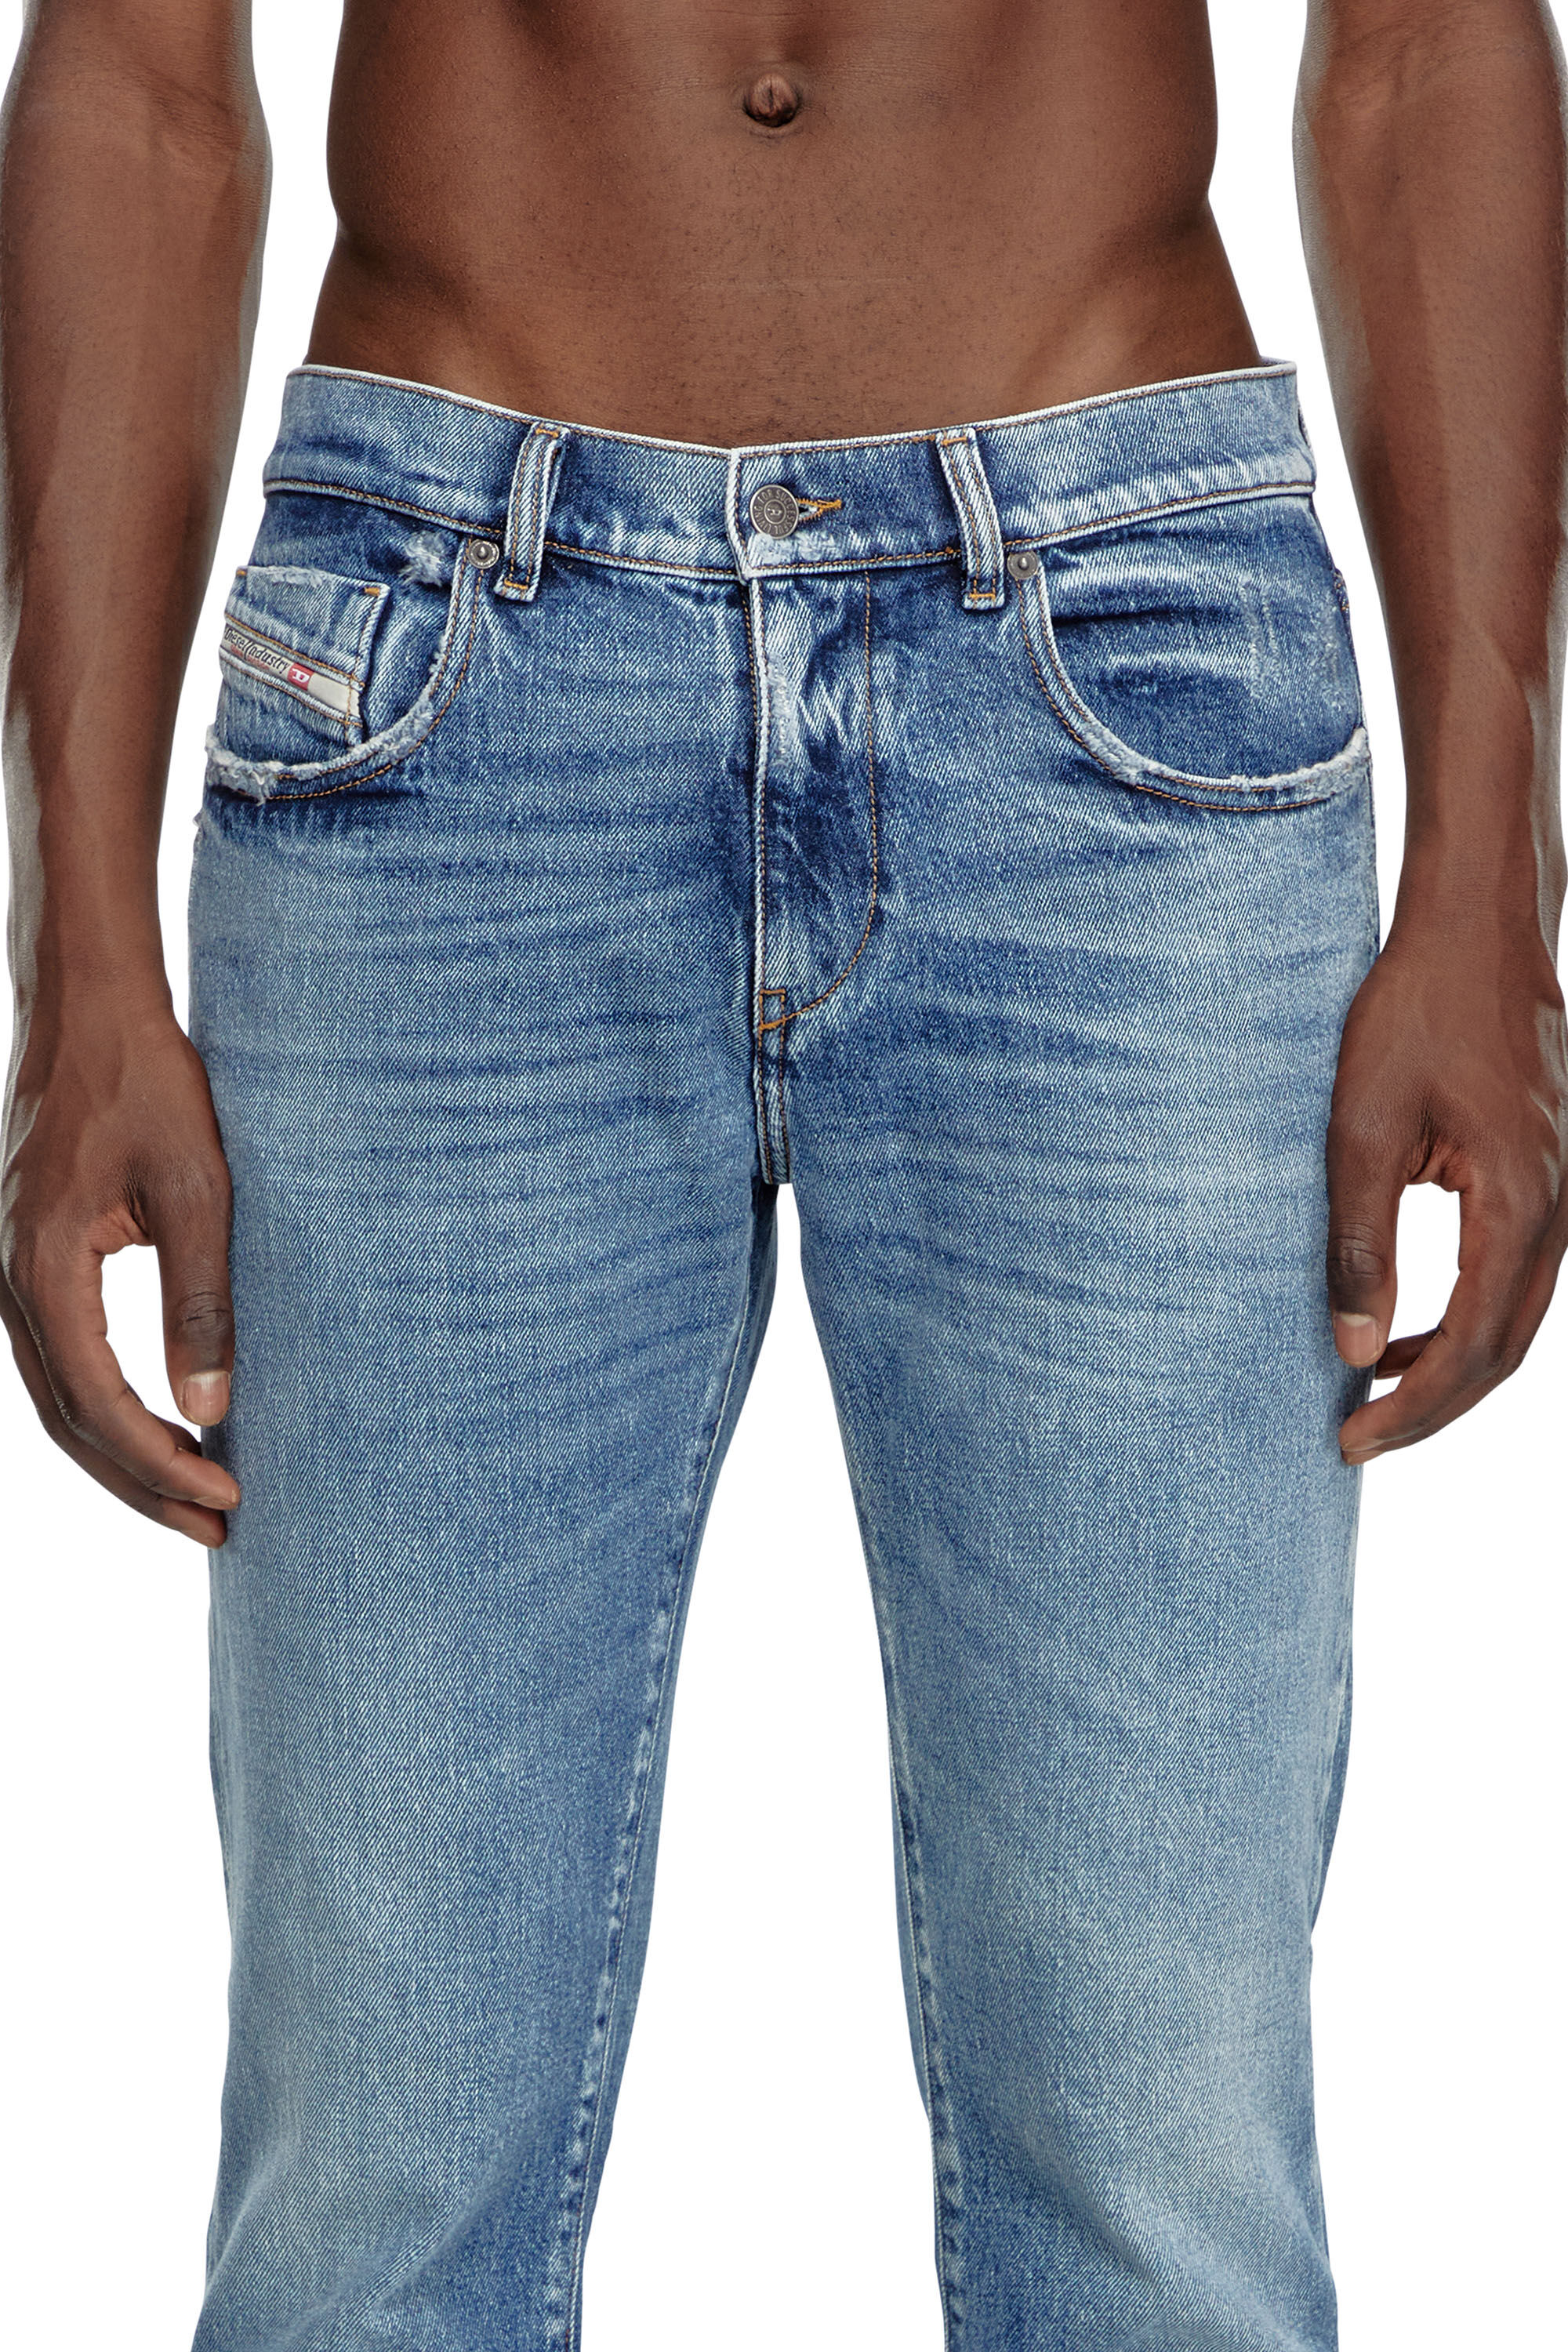 Diesel - Slim Jeans 2019 D-Strukt 09F16, Hombre Slim Jeans - 2019 D-Strukt in Azul marino - Image 5